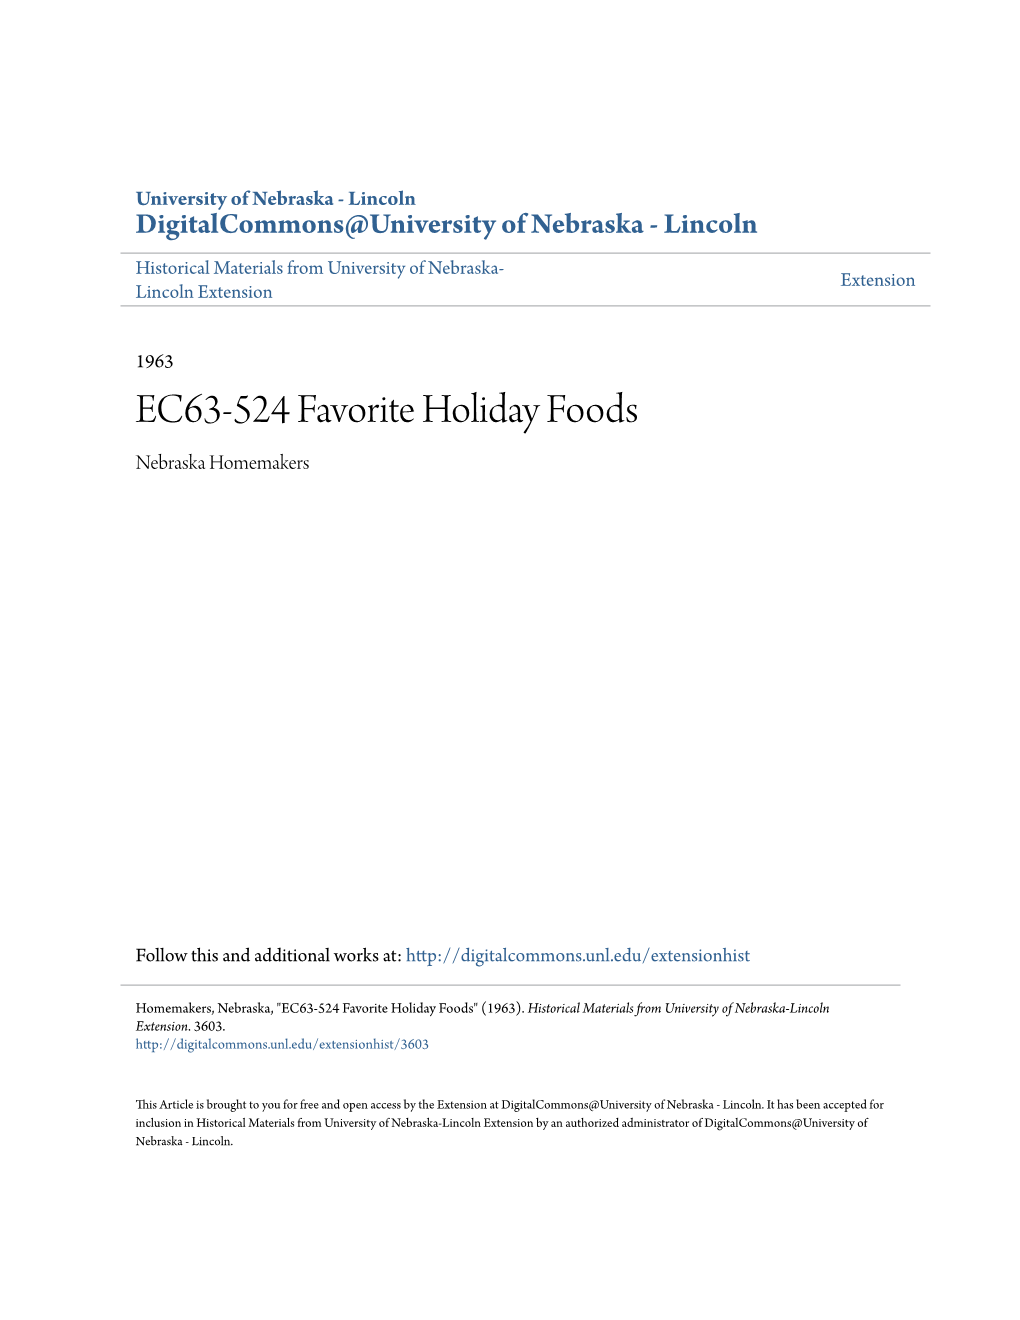 EC63-524 Favorite Holiday Foods Nebraska Homemakers